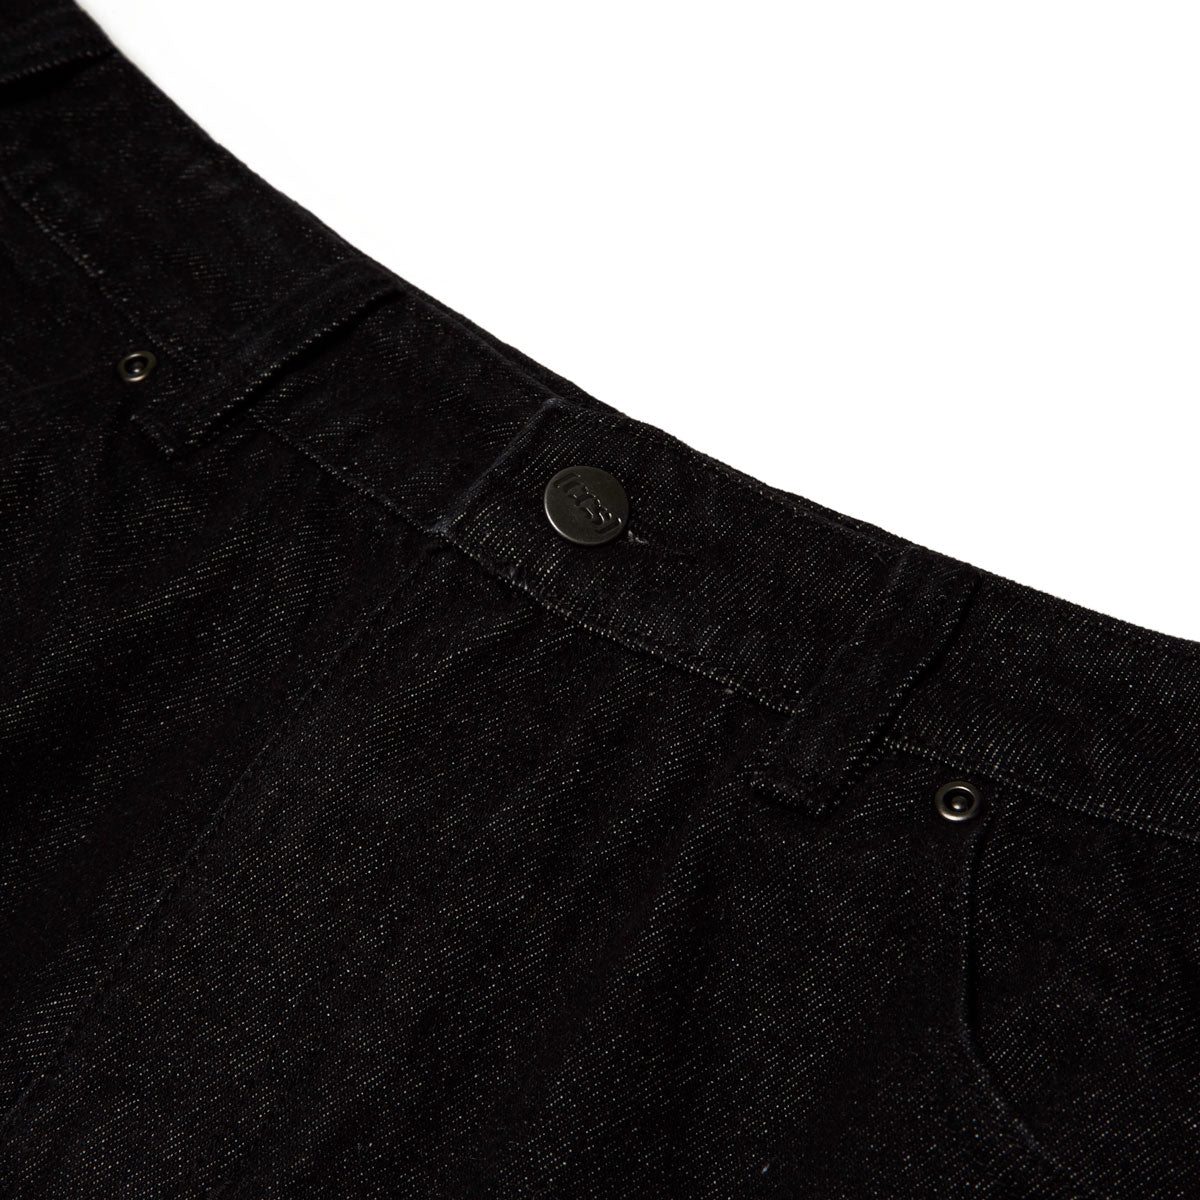 CCS Baggy Taper Denim Jeans - Black image 8